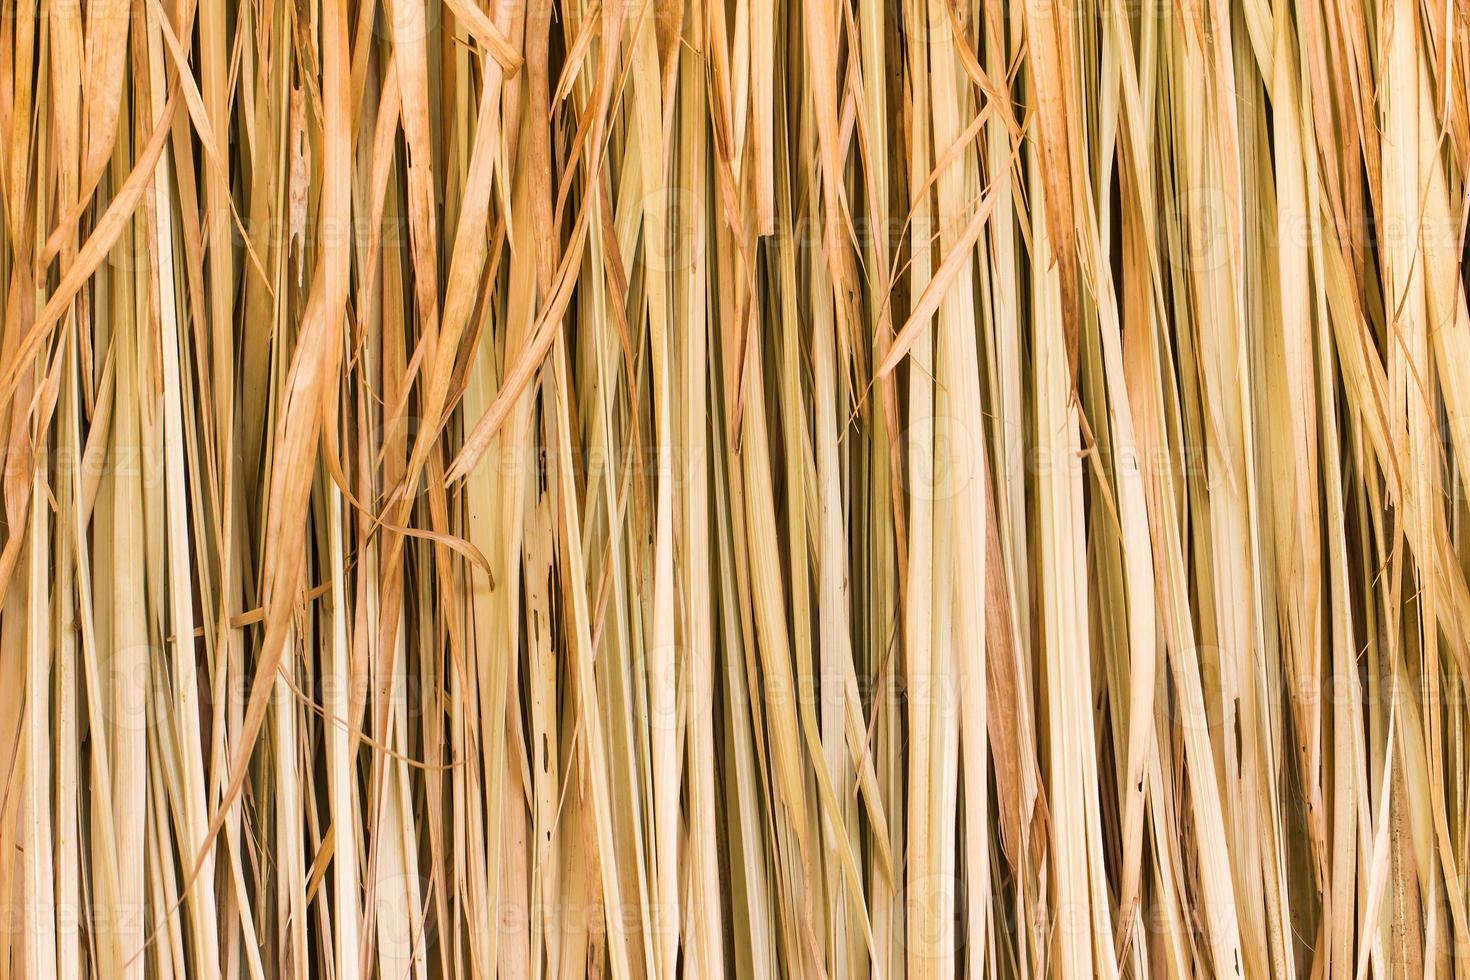 Texture of straw photo